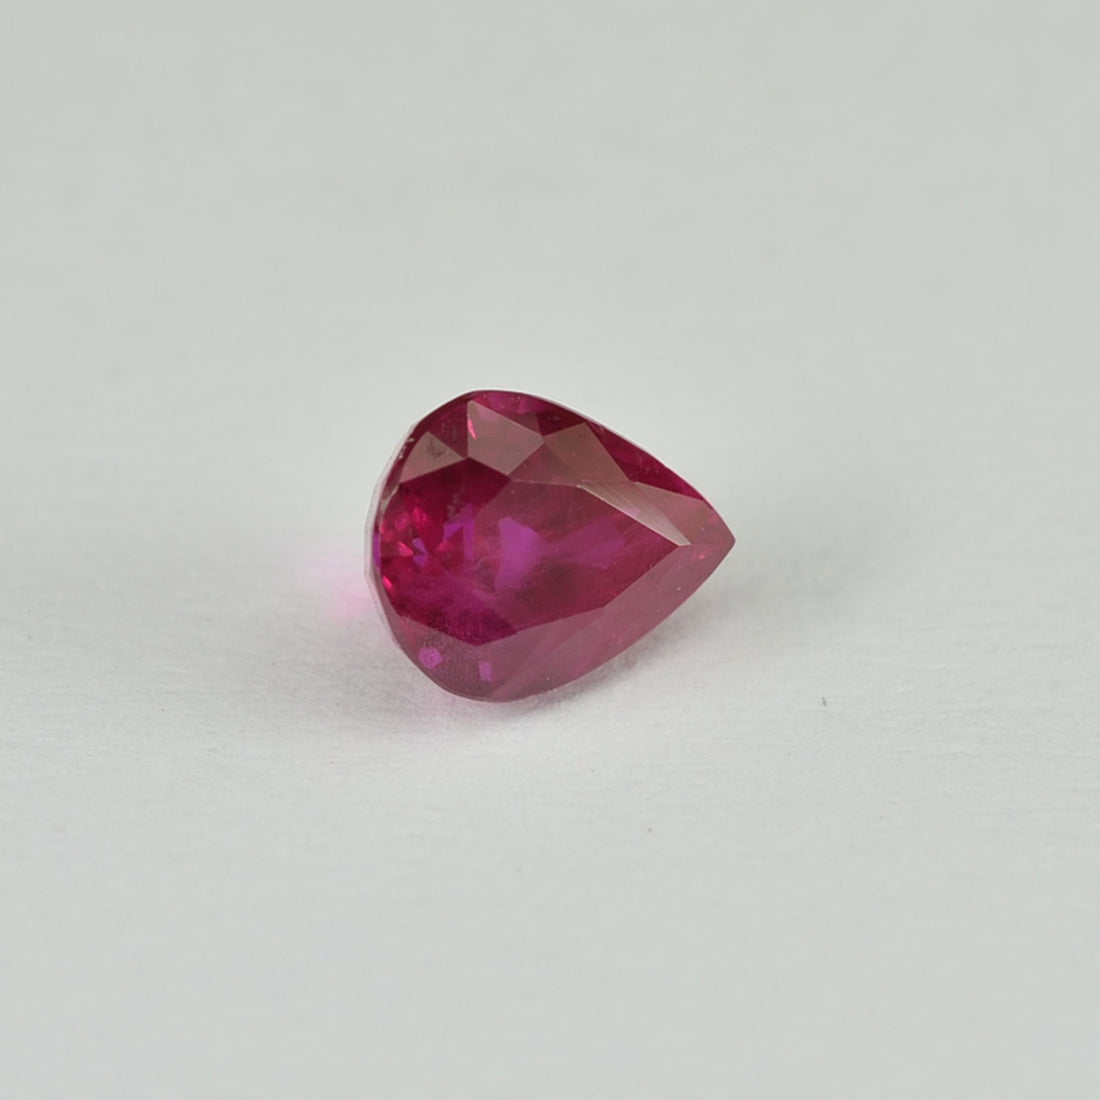 0.83 cts Natural Burma Ruby Loose Gemstone Pear Cut